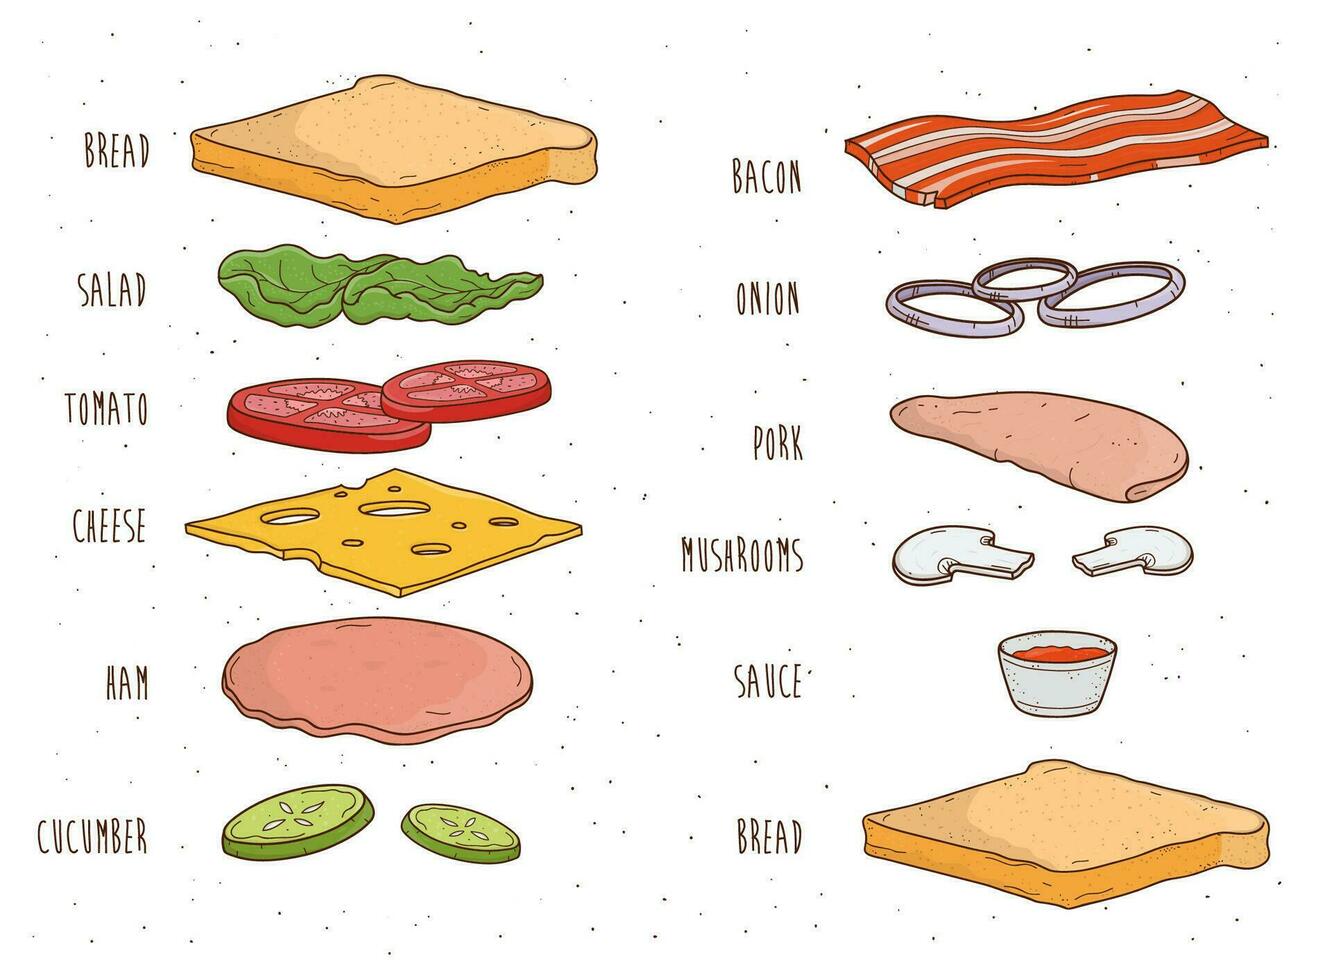 emparedado ingredientes por separado. pan, ensalada, tomate, queso, salsa, hongos, tocino, cebolla. vistoso mano dibujado vector ilustración.